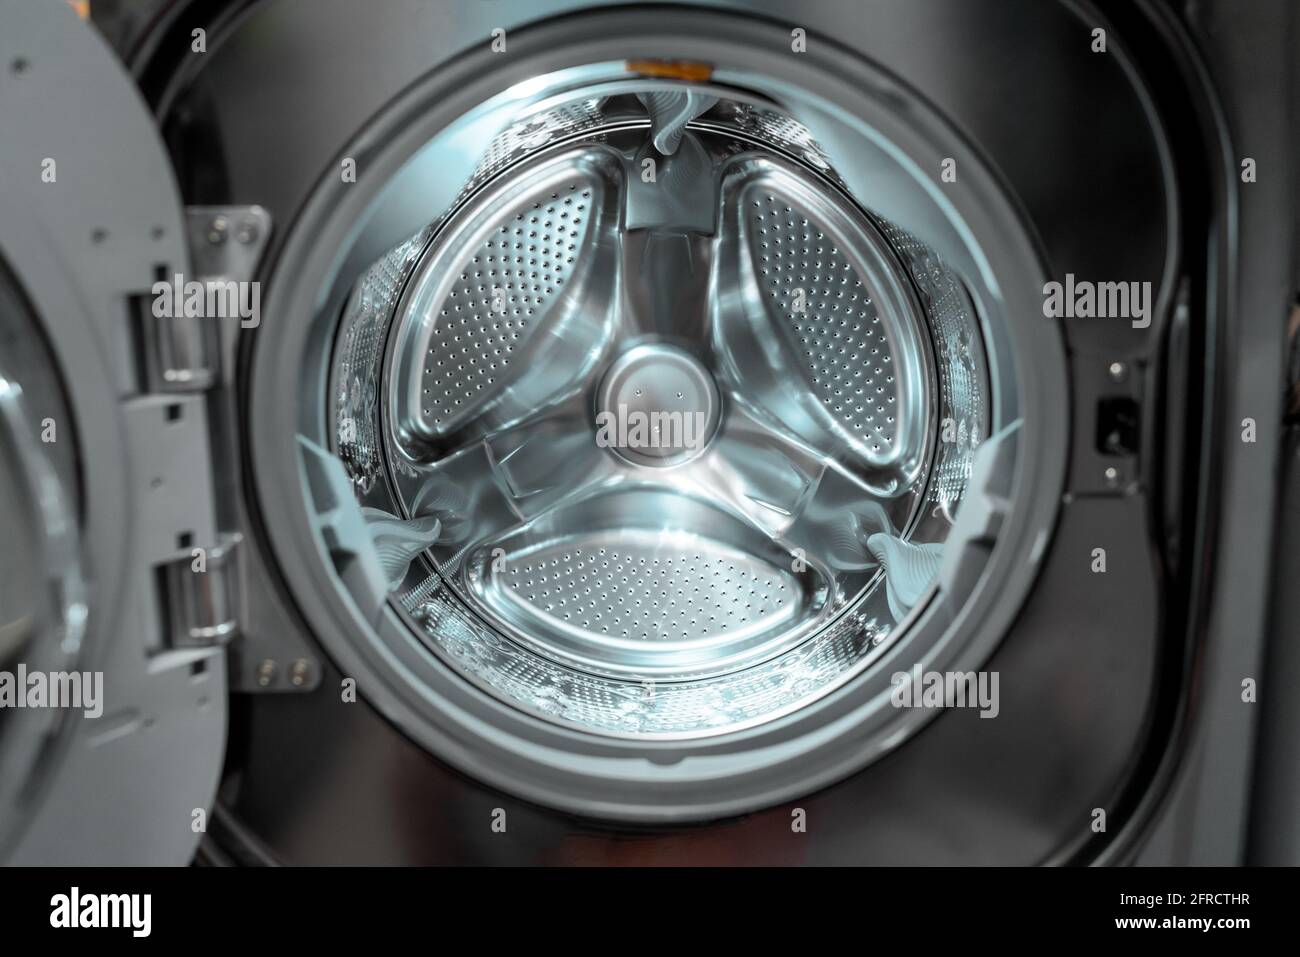 Washing machine laundry home appliance closeup of inside drum Stock Photo